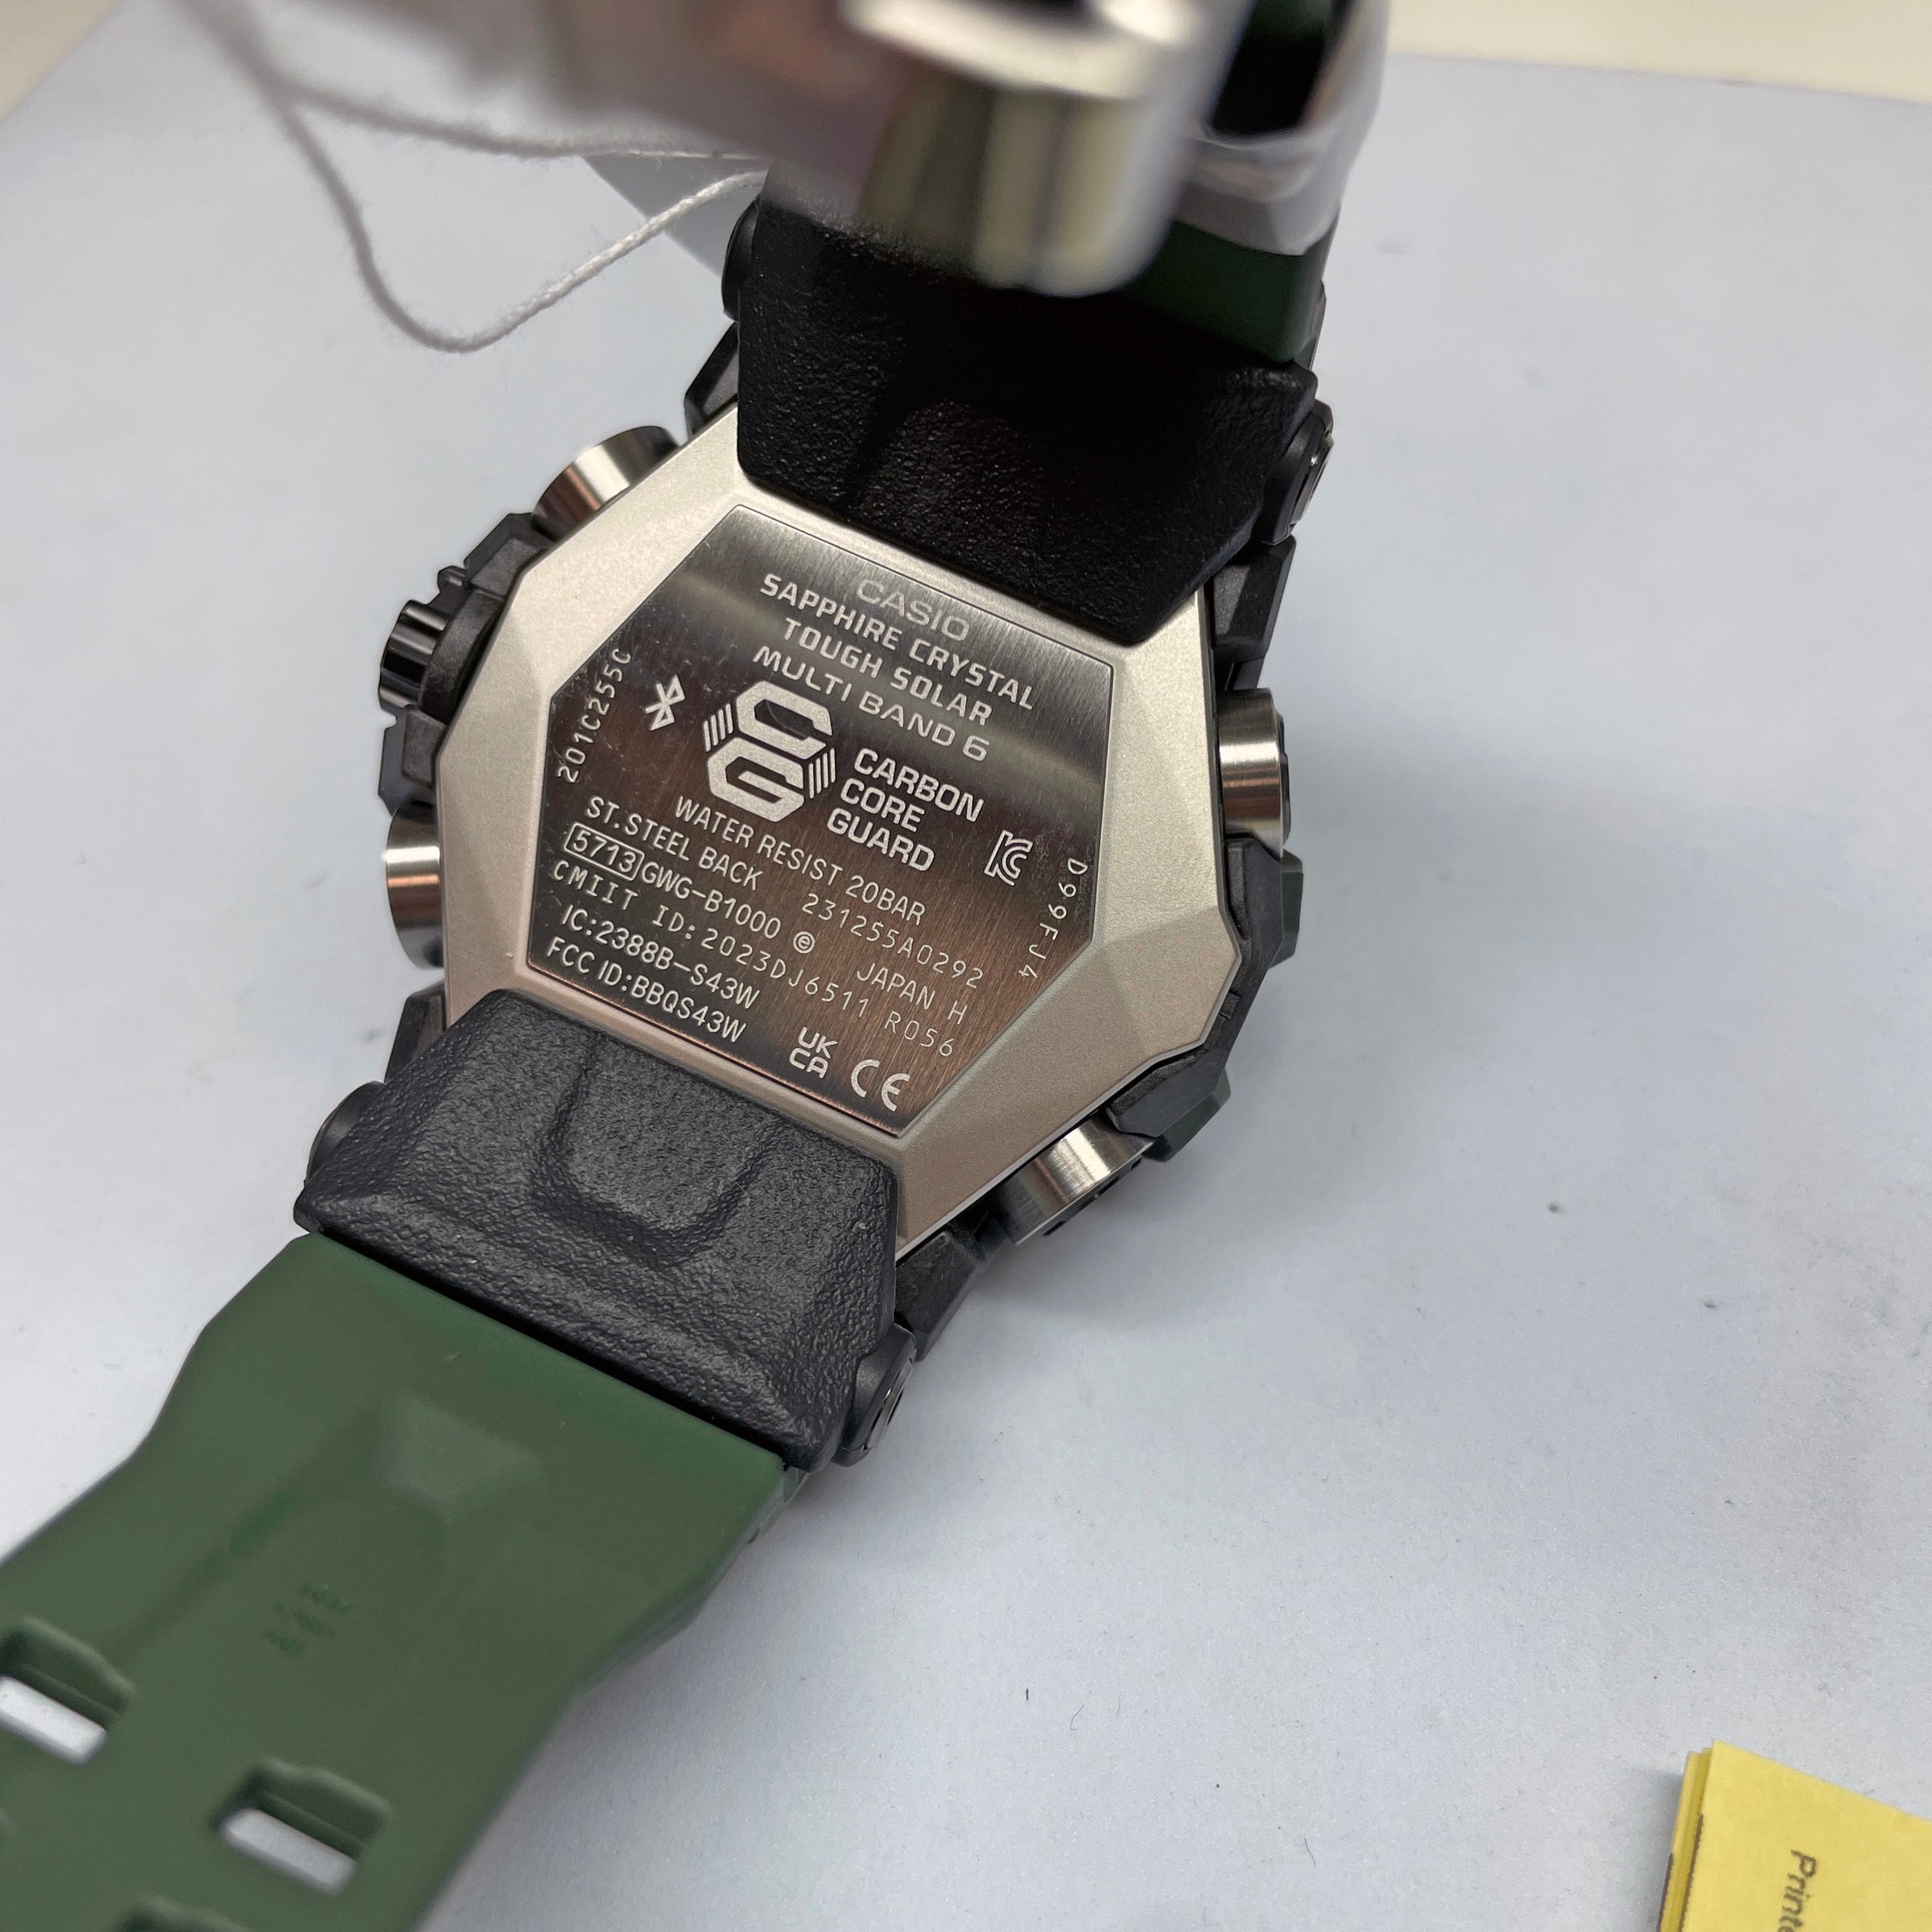 Casio G-Shock Master of G Mudmaster Connected Solar Watch GWGB1000-3A